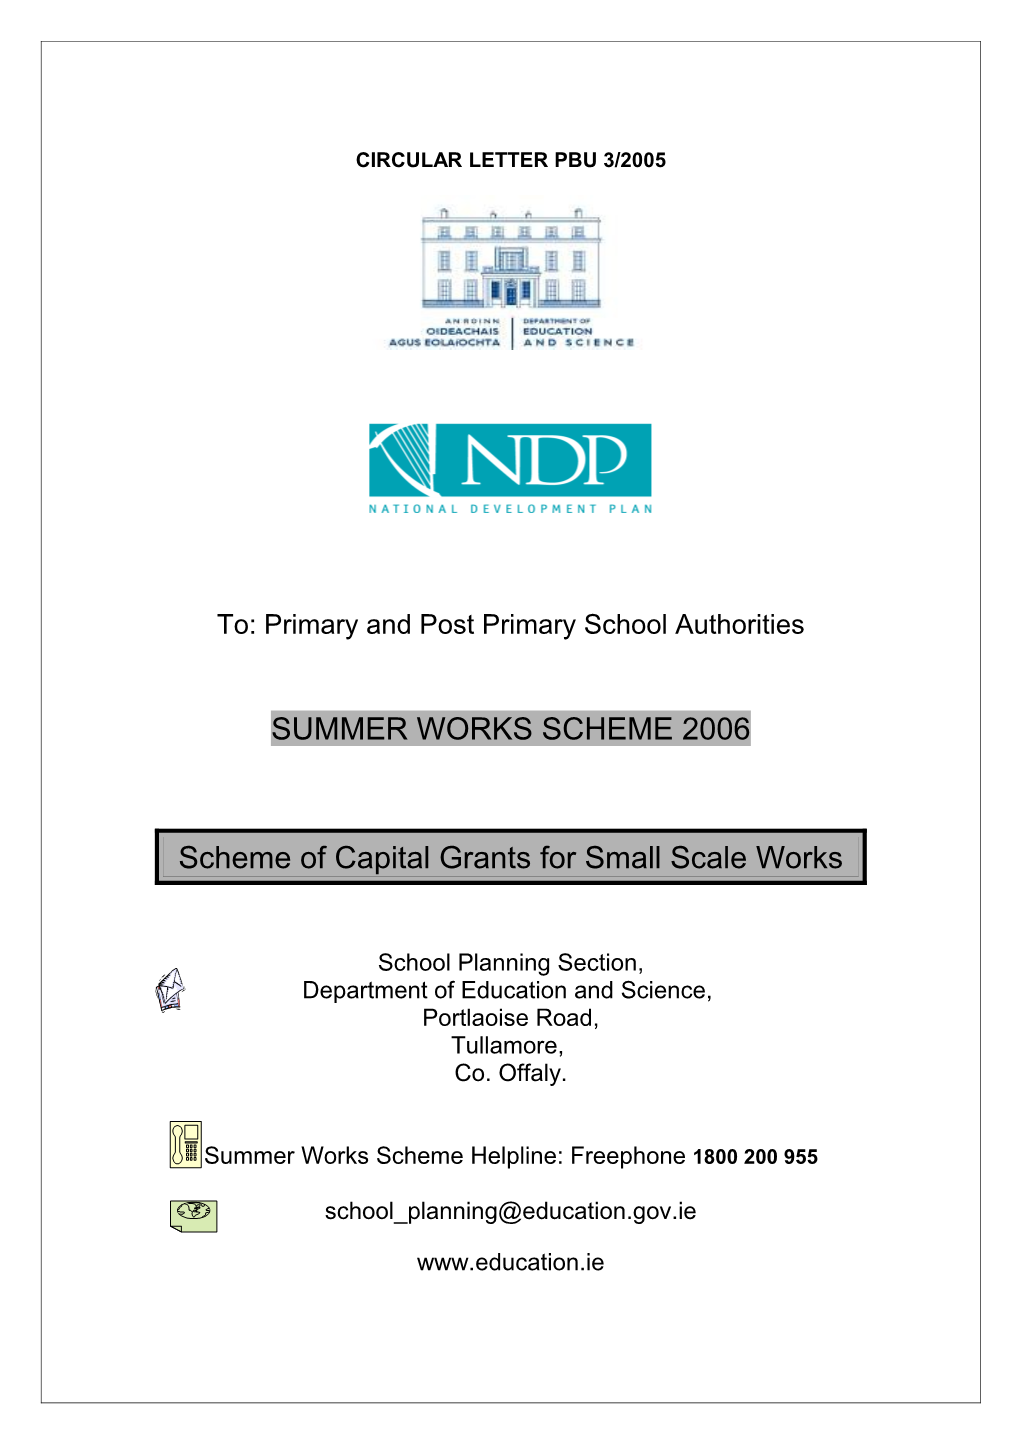 Circular PBU03/05 - Summer Works Scheme 2006 - Scheme of Capital Grants for Small Scale